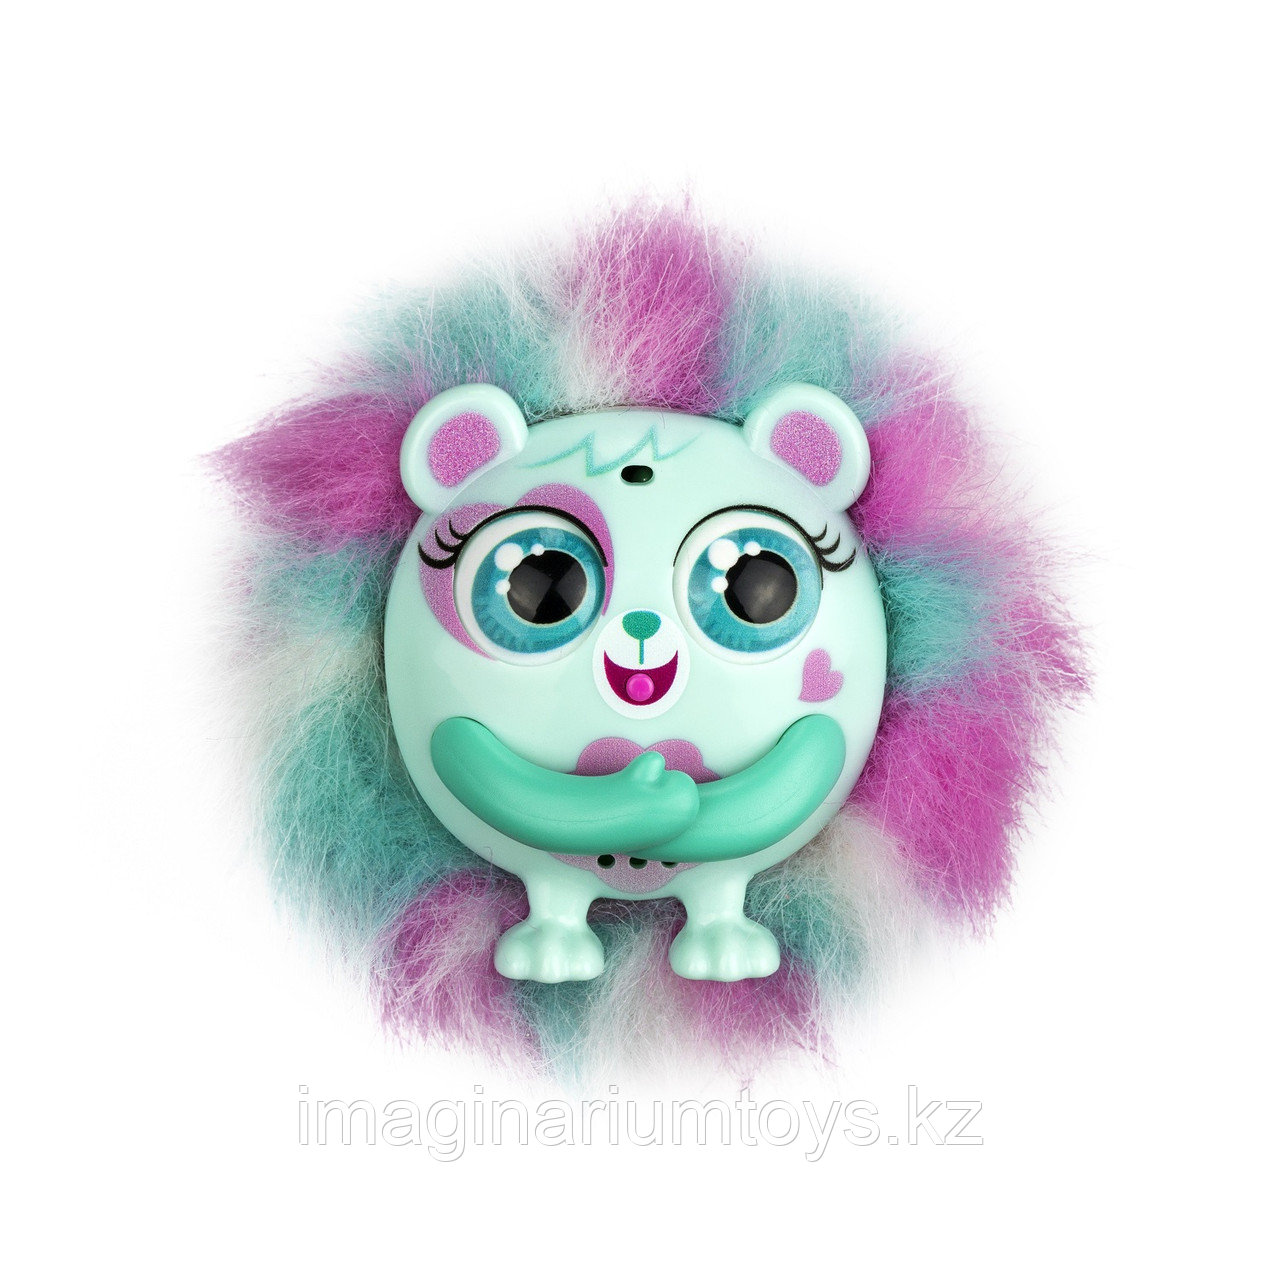 Игрушка Tiny Furry интерактивный питомец Mint, фото 1